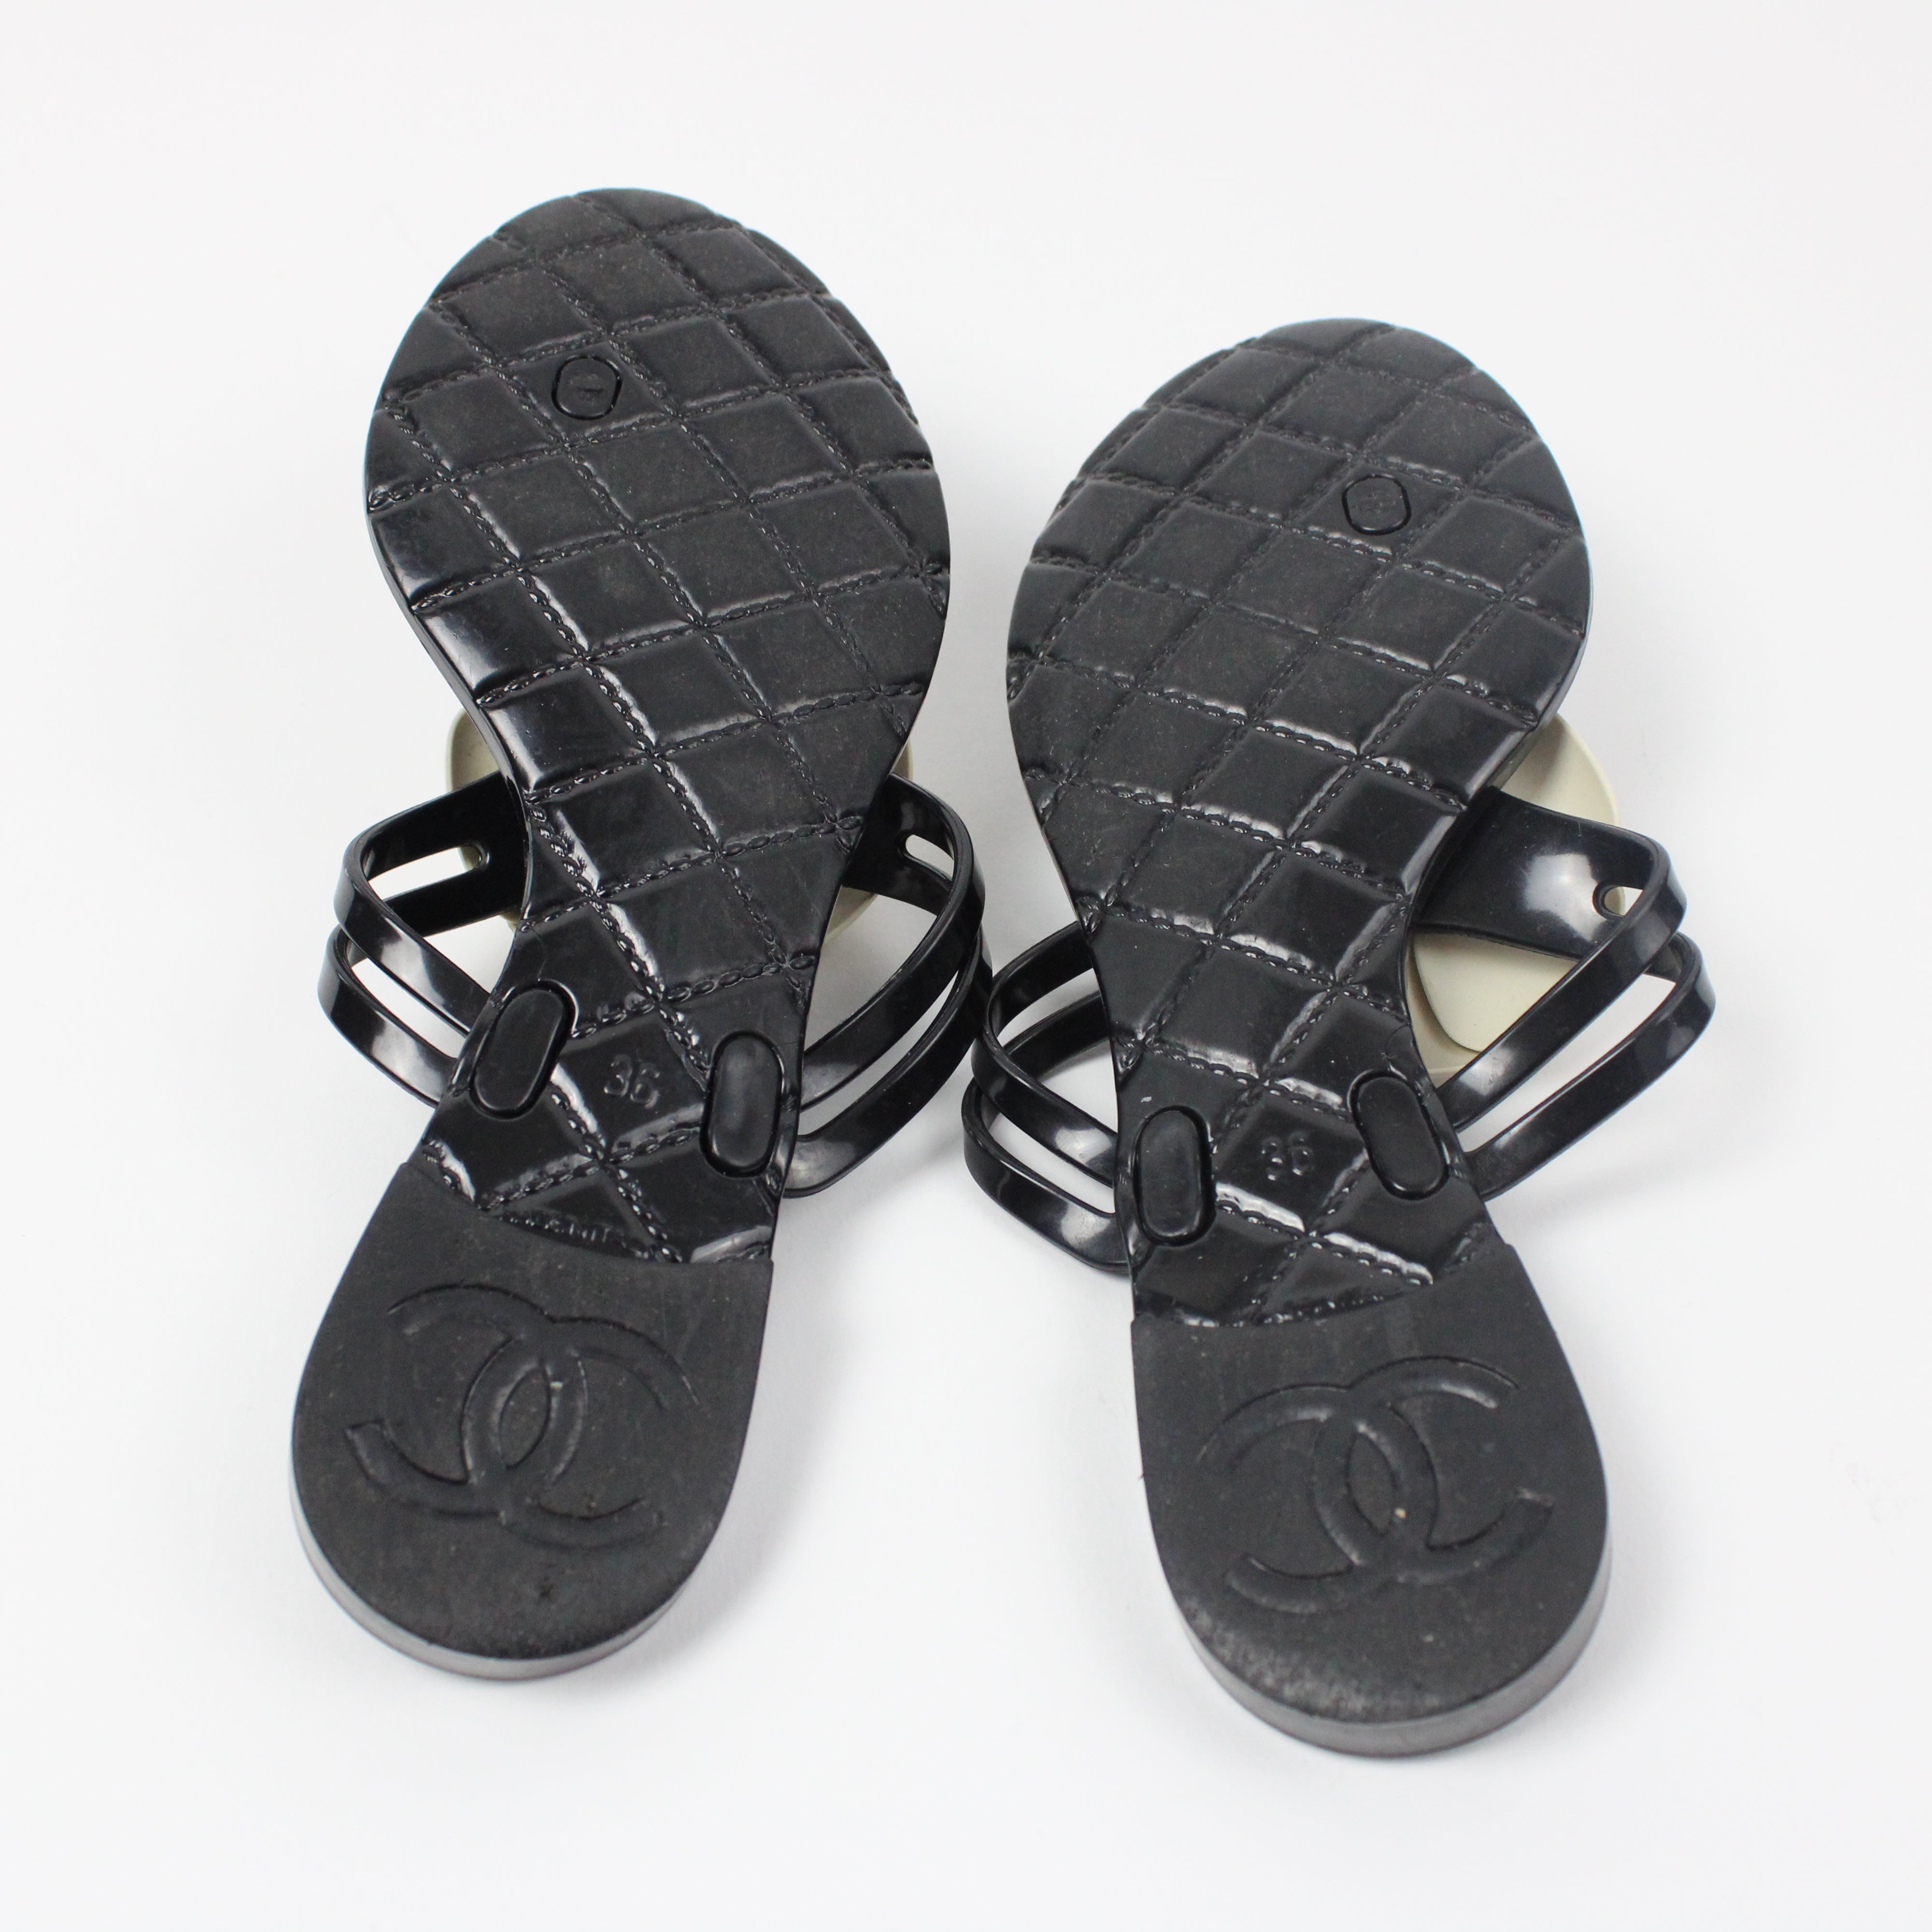 Chanel Women's Flower Sandals Size 36